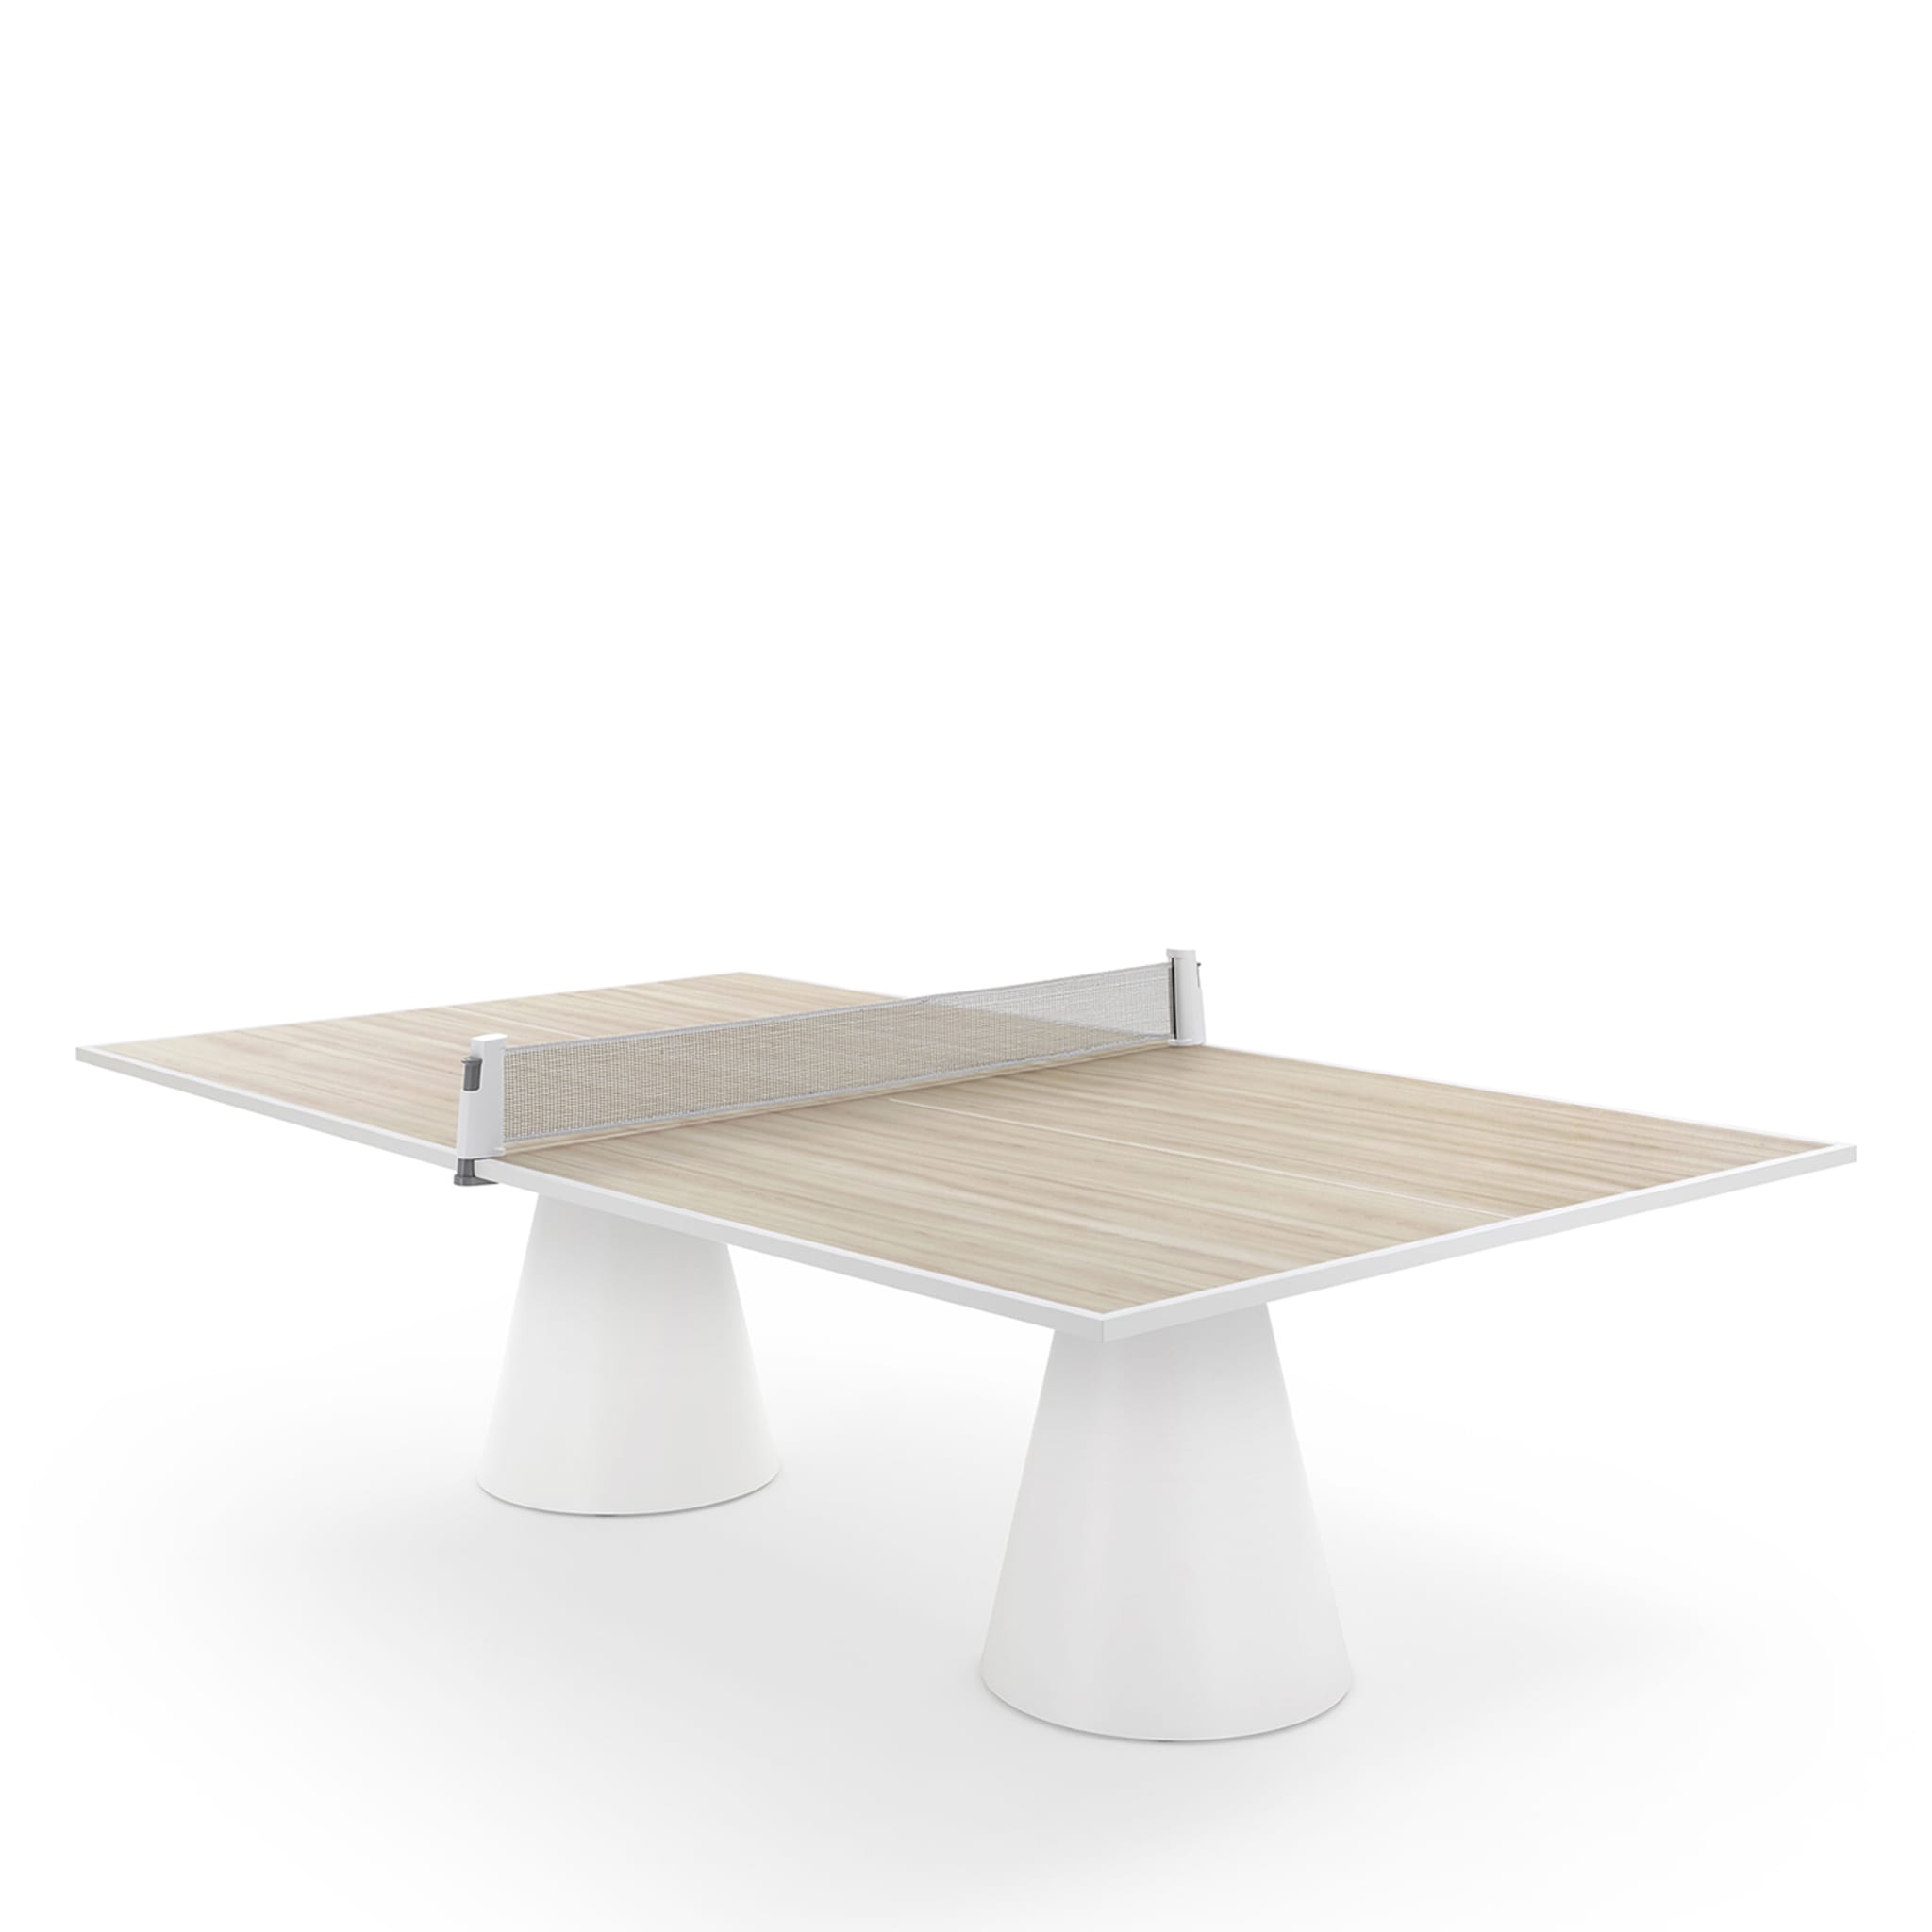 Dada Ping Pong Table by Basaglia + Rota Nodari - Alternative view 1